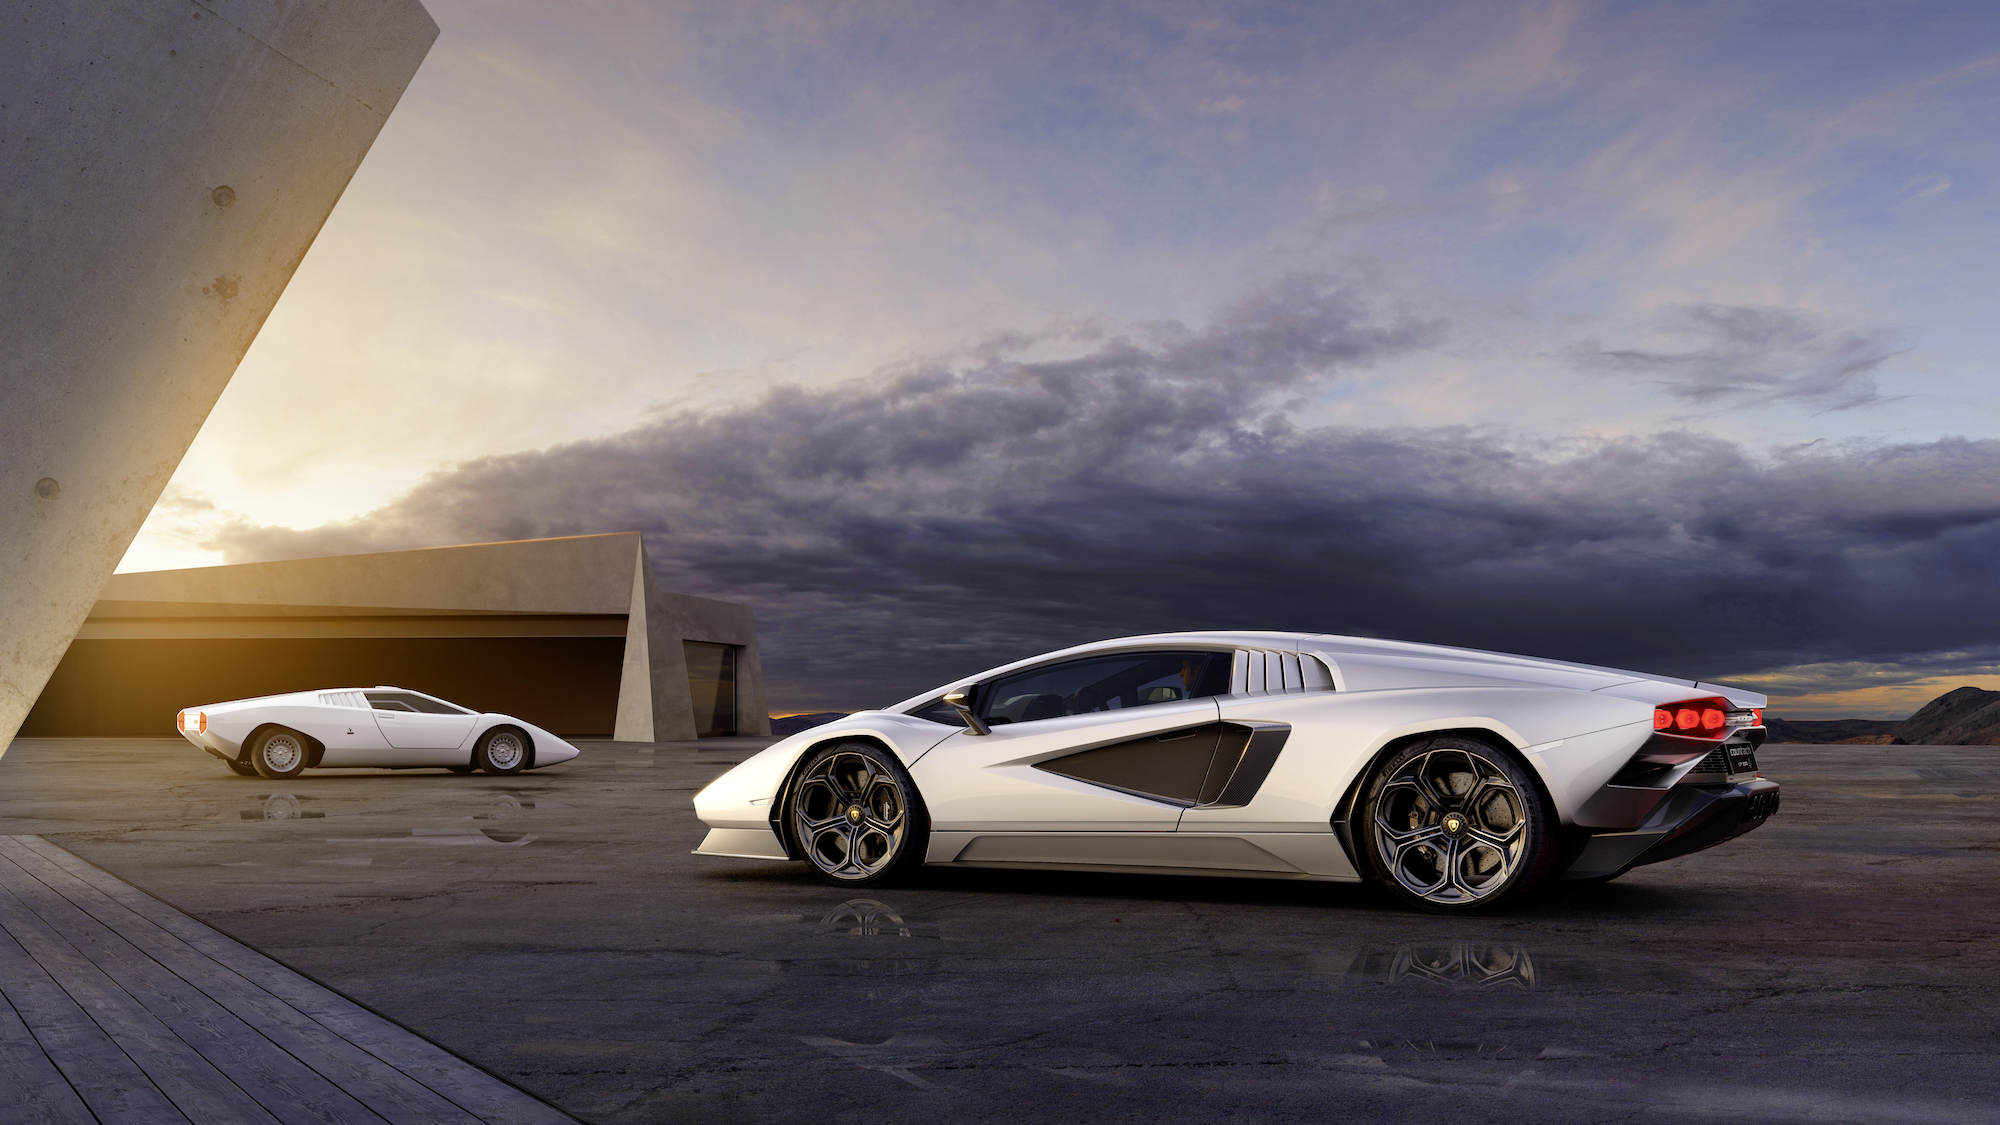 Lamborghini's modern take on the Countach is electric